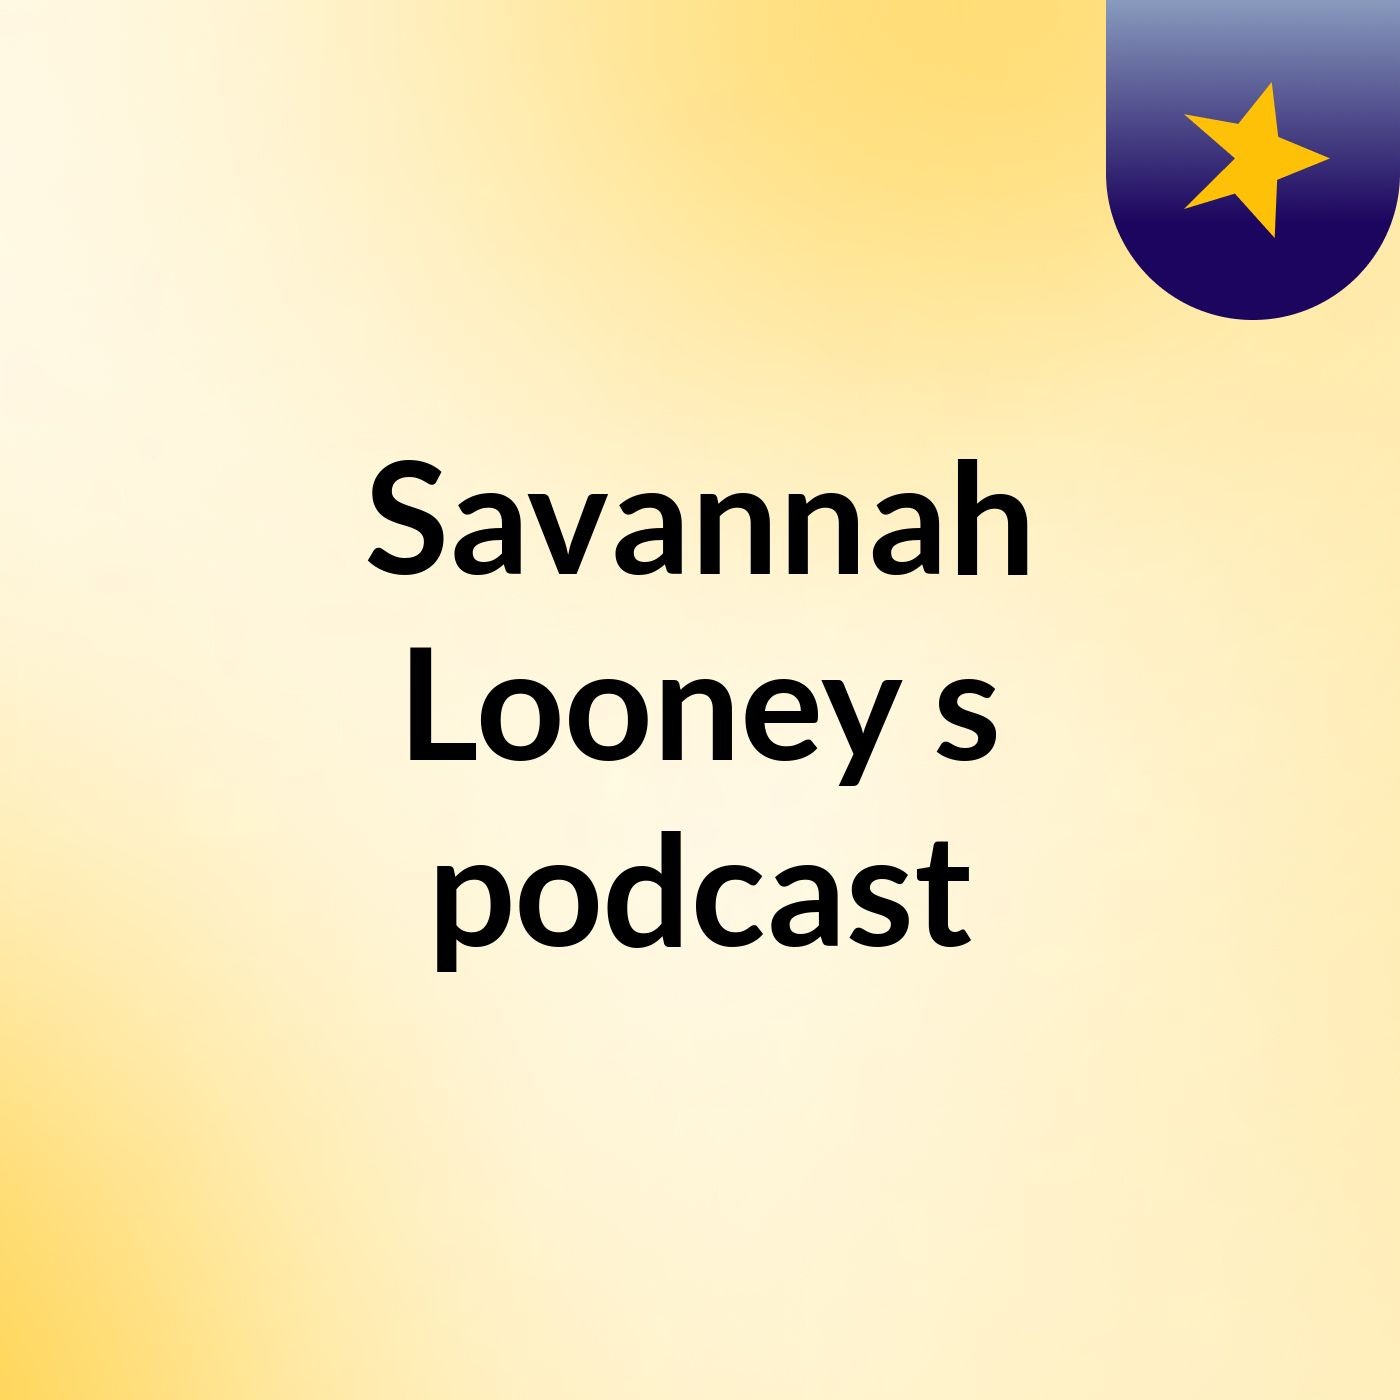 Savannah Looney's podcast